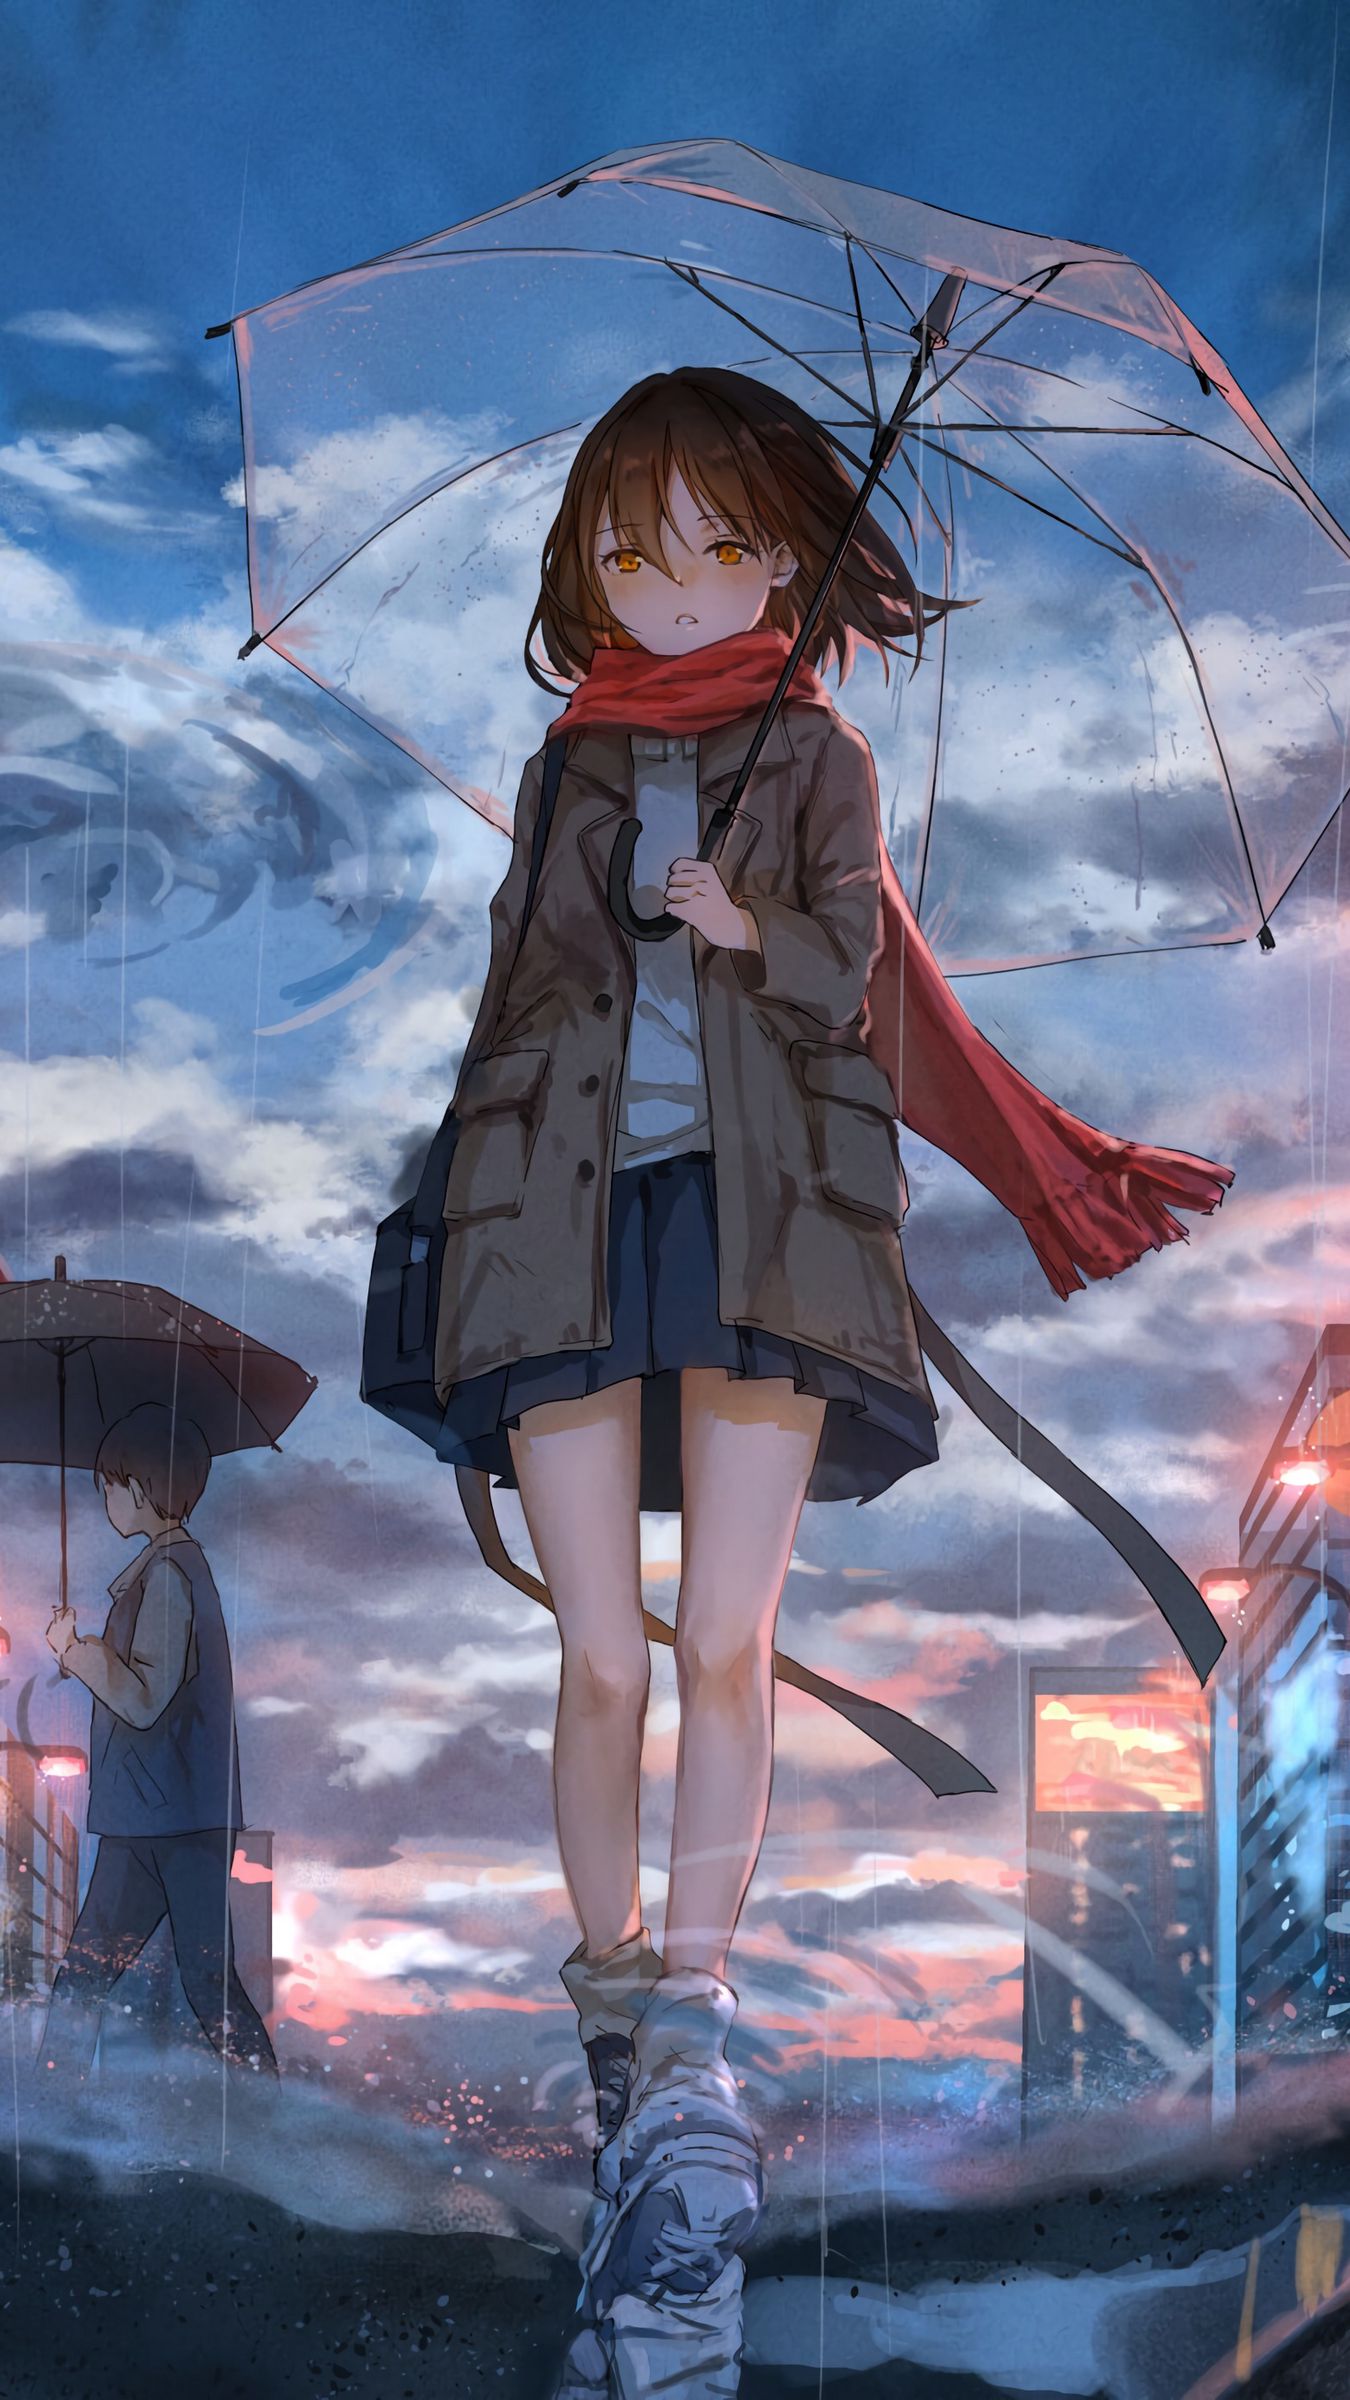 Download wallpaper 1350x2400 girl umbrella anime rain sadness iphone  876s6 for parallax hd background